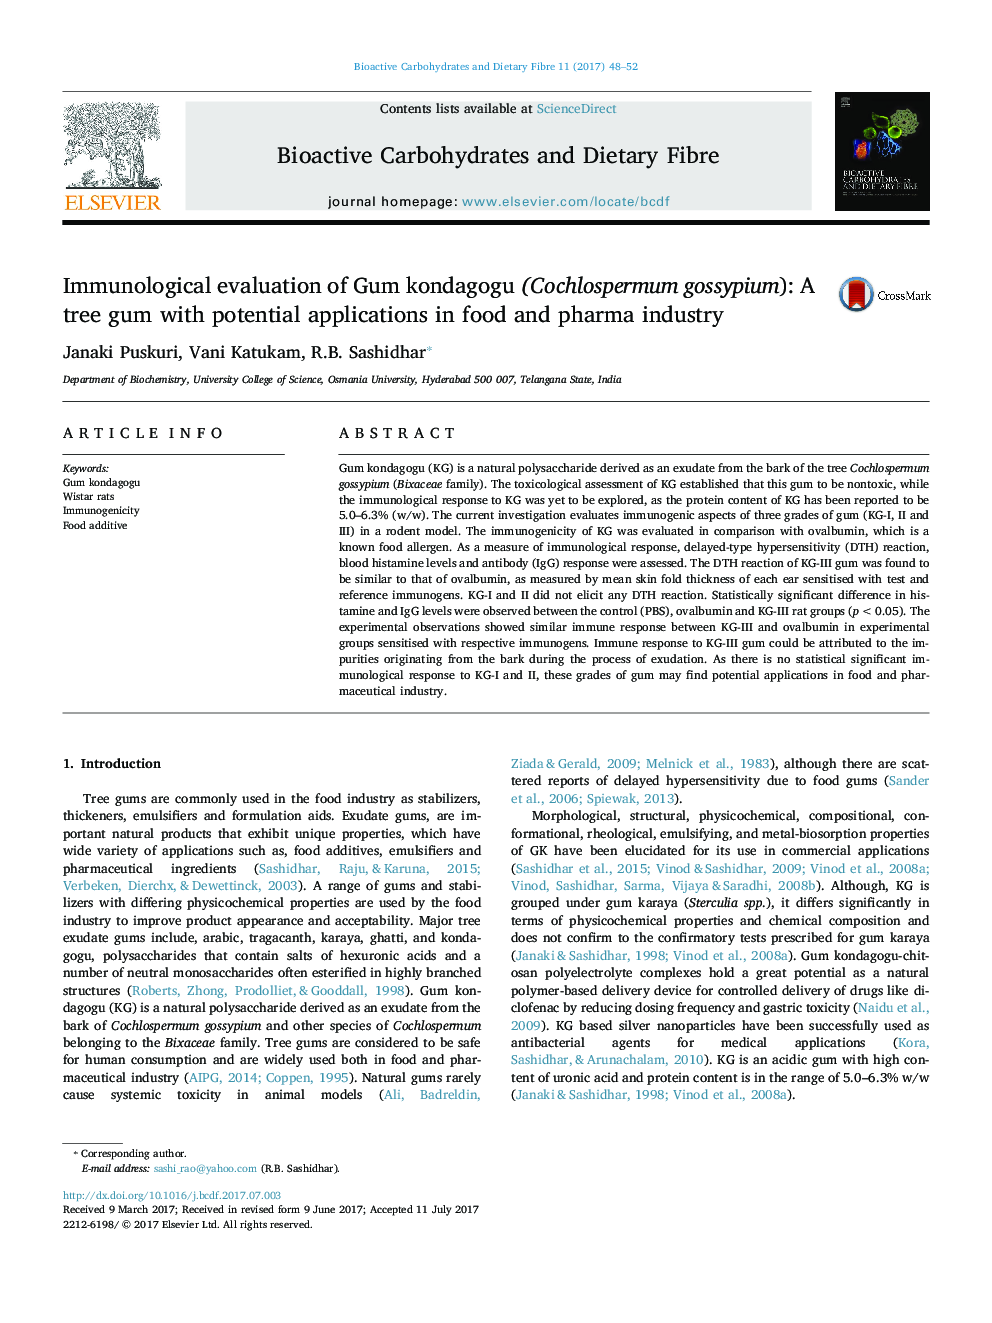 Immunological evaluation of Gum kondagogu (Cochlospermum gossypium): A tree gum with potential applications in food and pharma industry